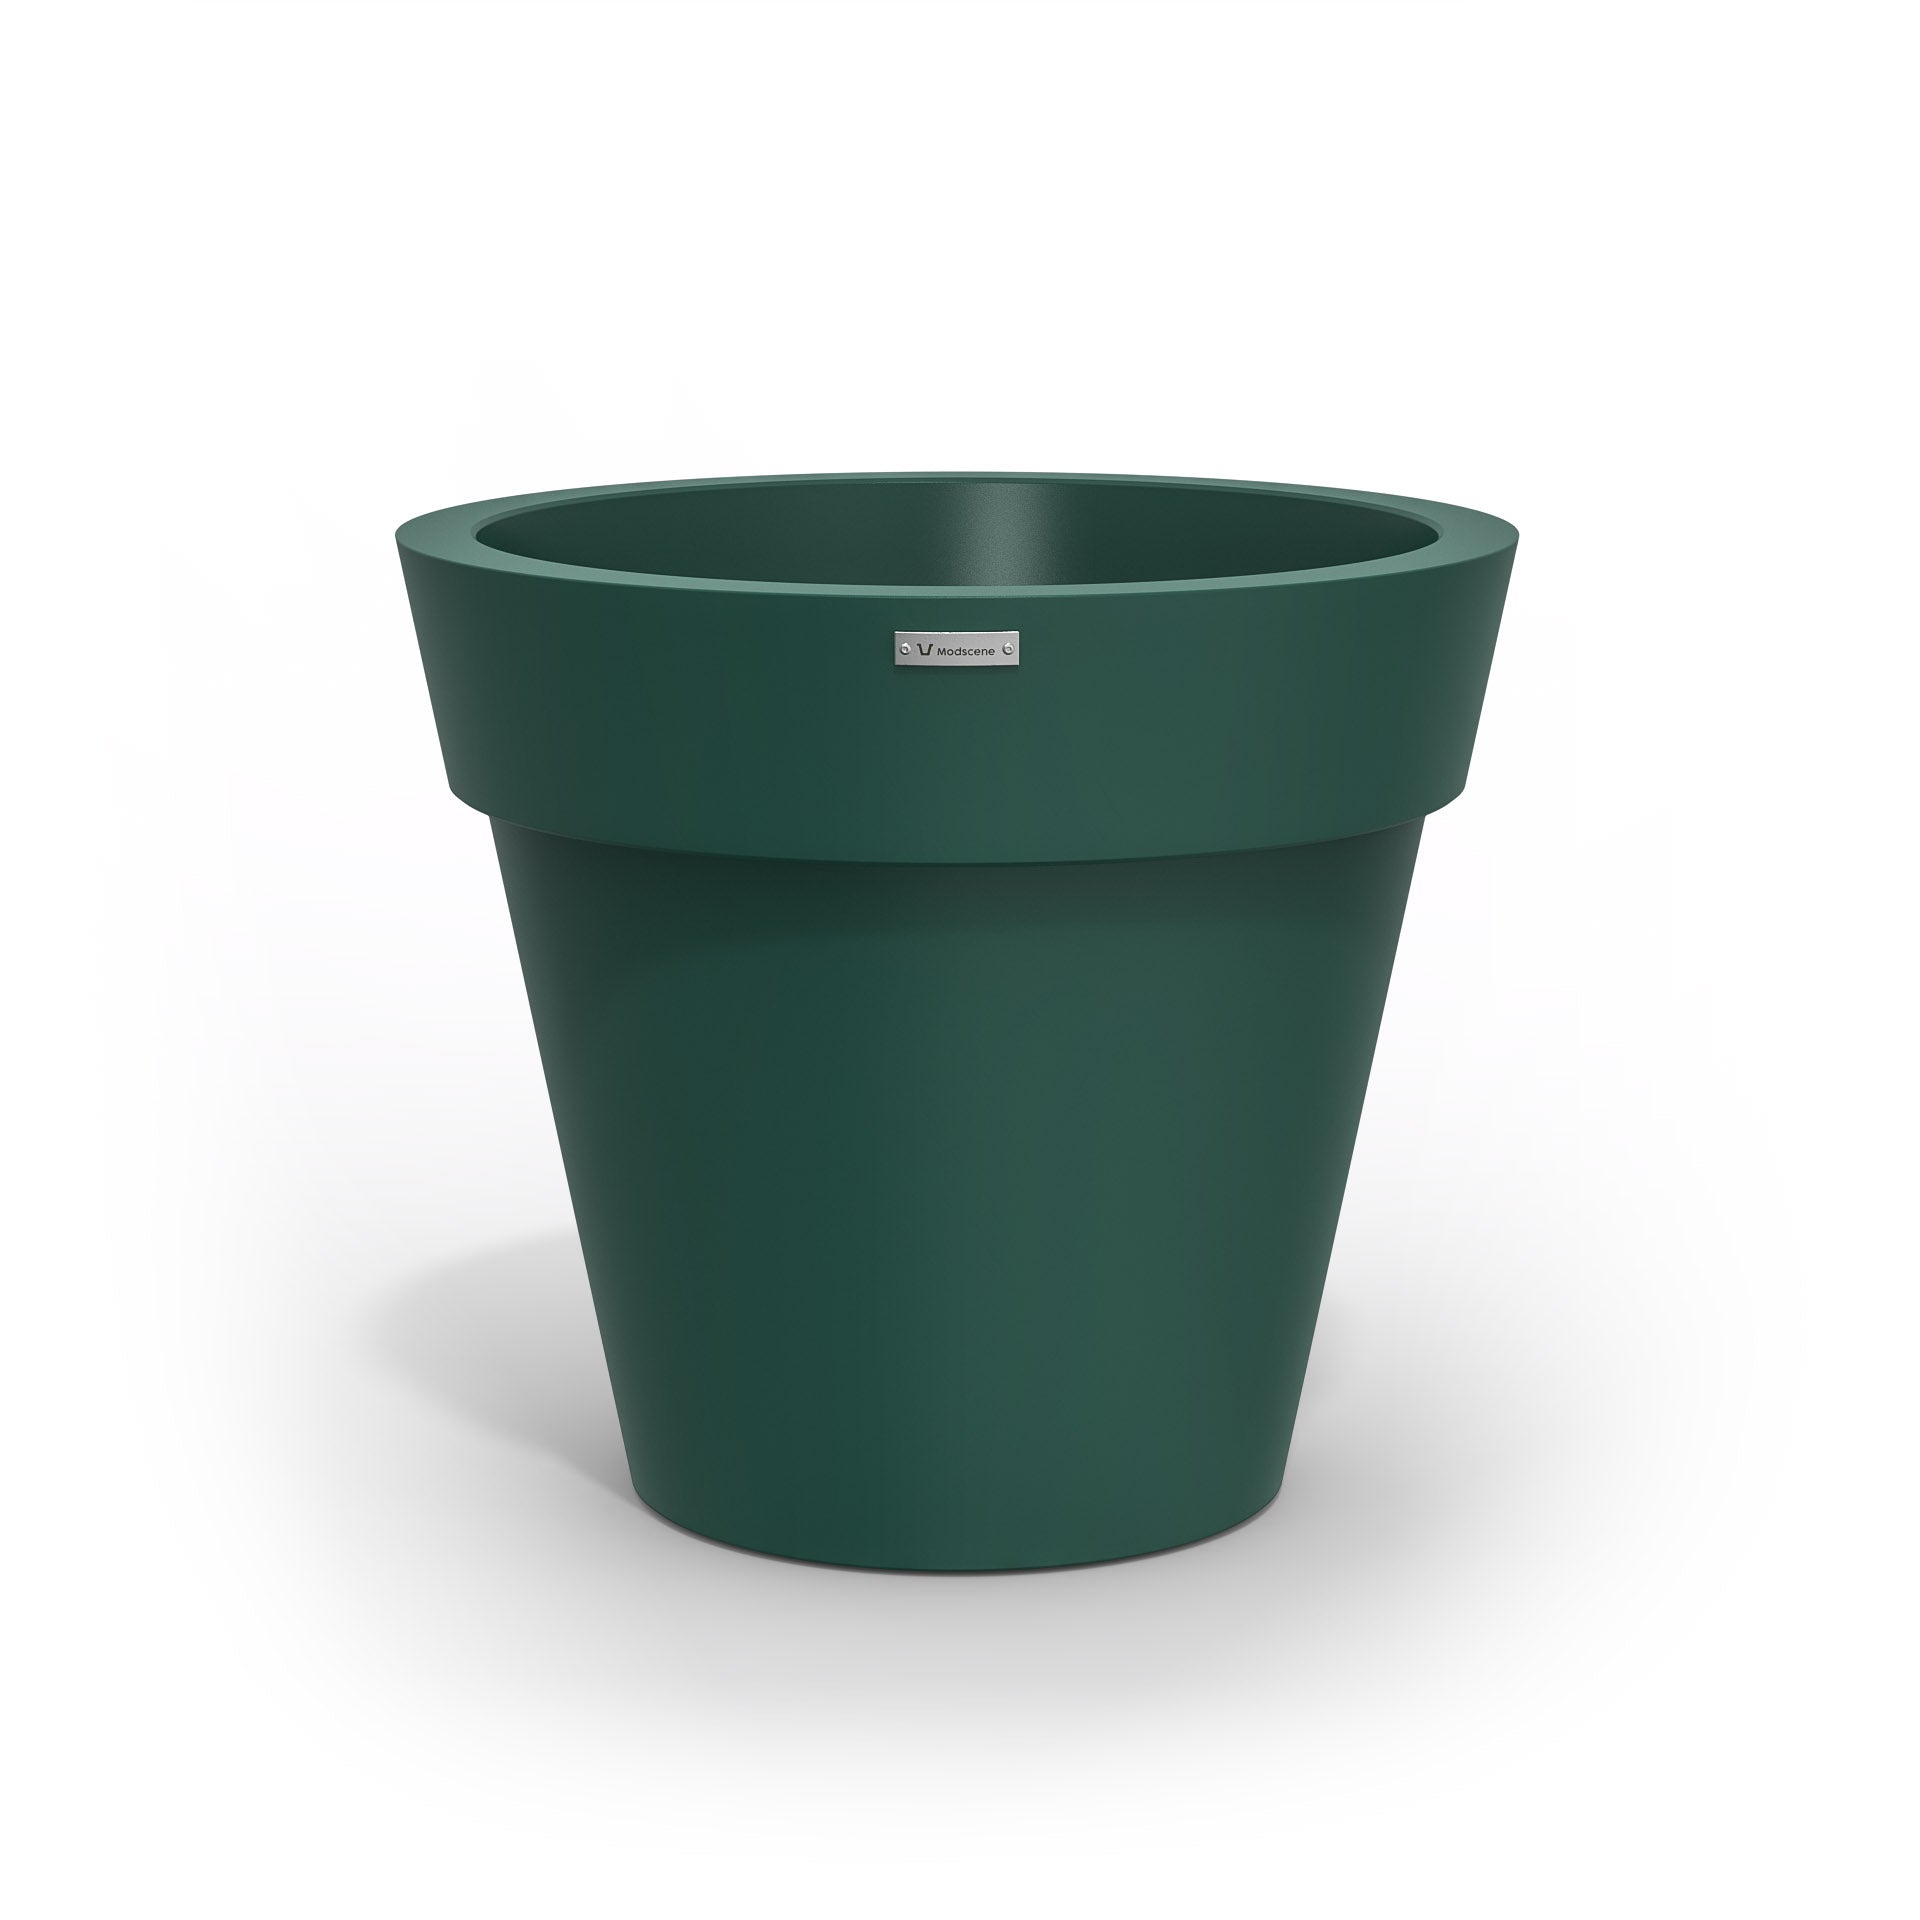 A medium sized Modscene plastic planter pot made in an emerald green colour. NZ made.